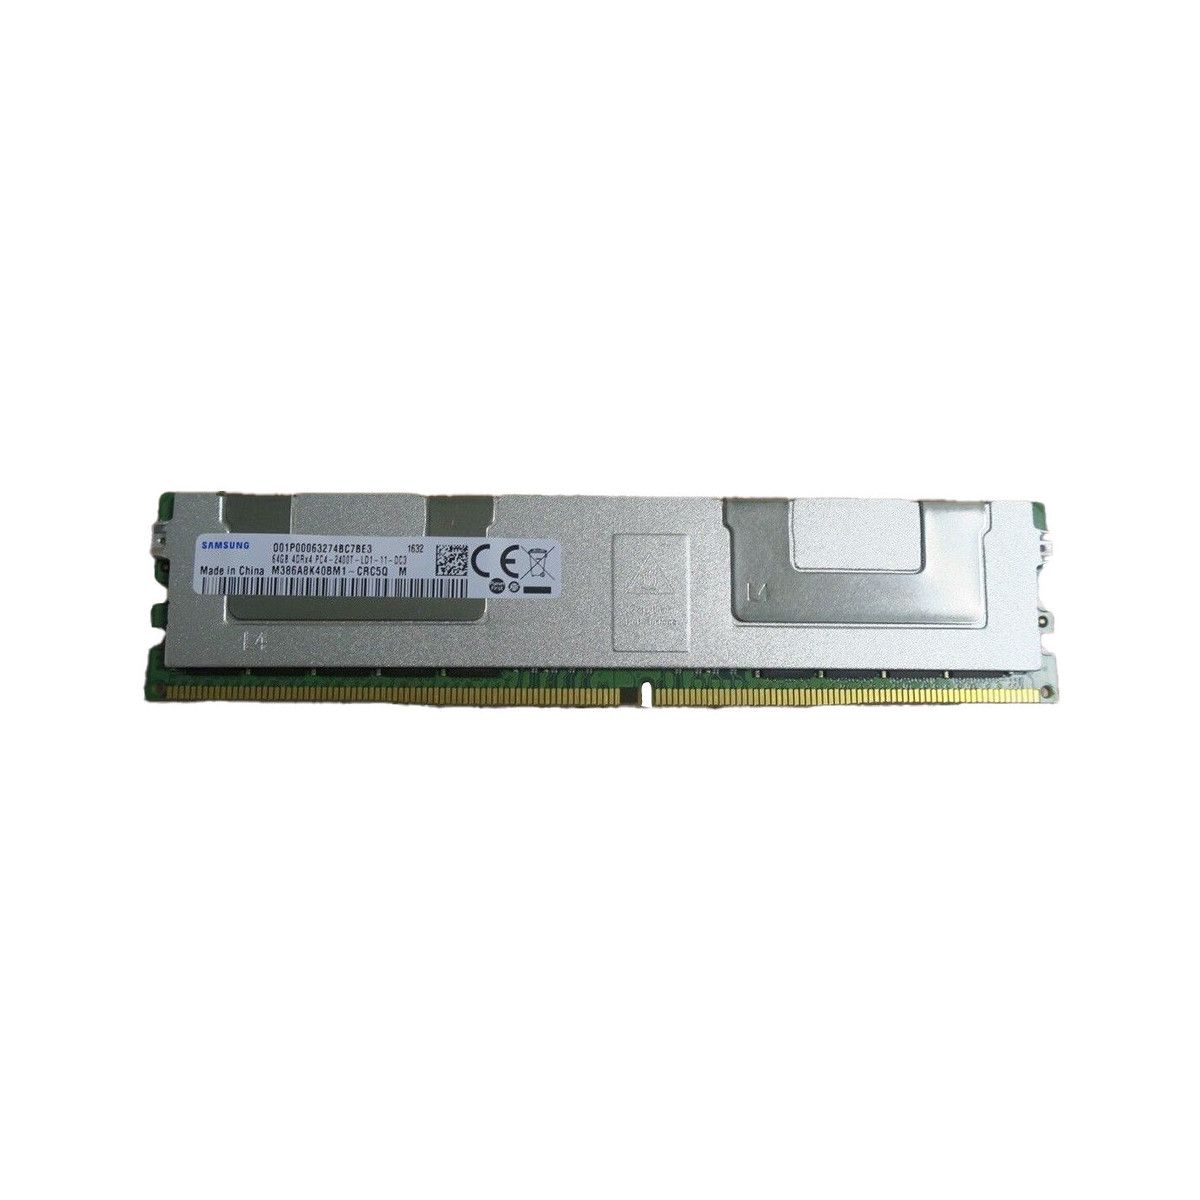 859992-B21-MS -NO- Memstar 1x 64GB DDR4-2400 LRDIMM PC4-19200T-R